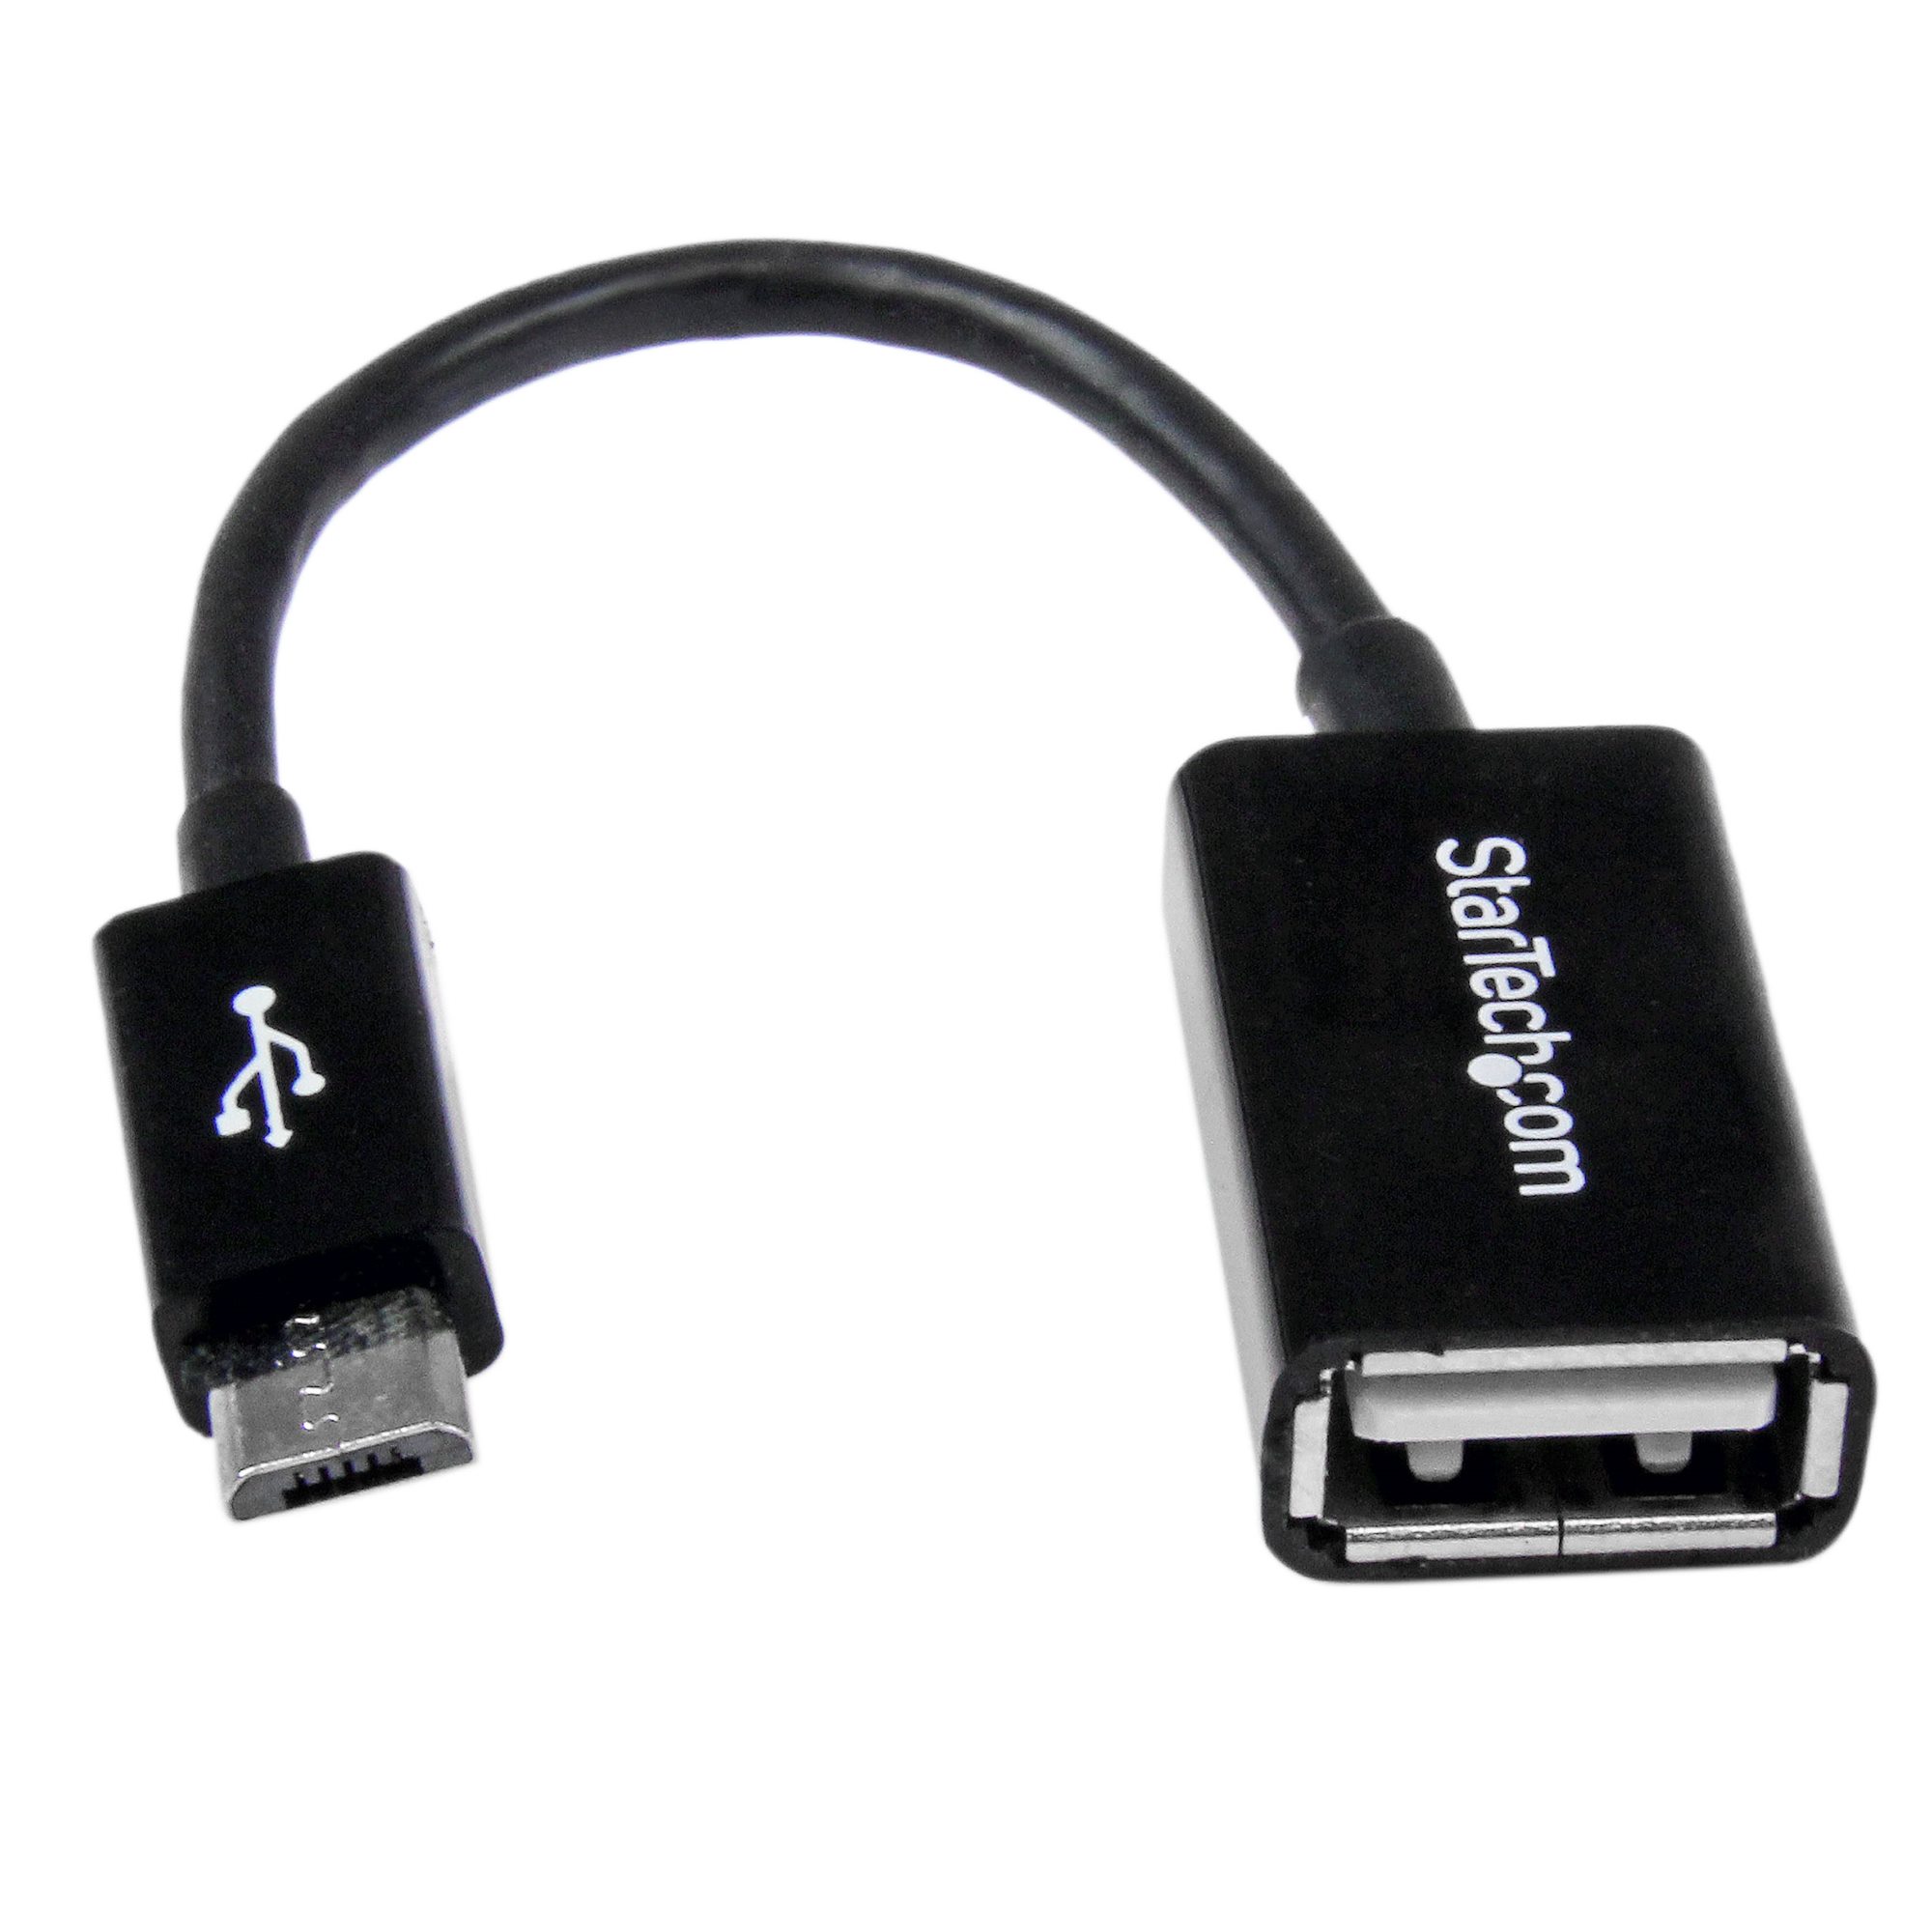 Monbedos Adaptador USB OTG 2 unidades, USB hembra macho función OTG a USB USB 2.0 para Apple MacBook y Pro 